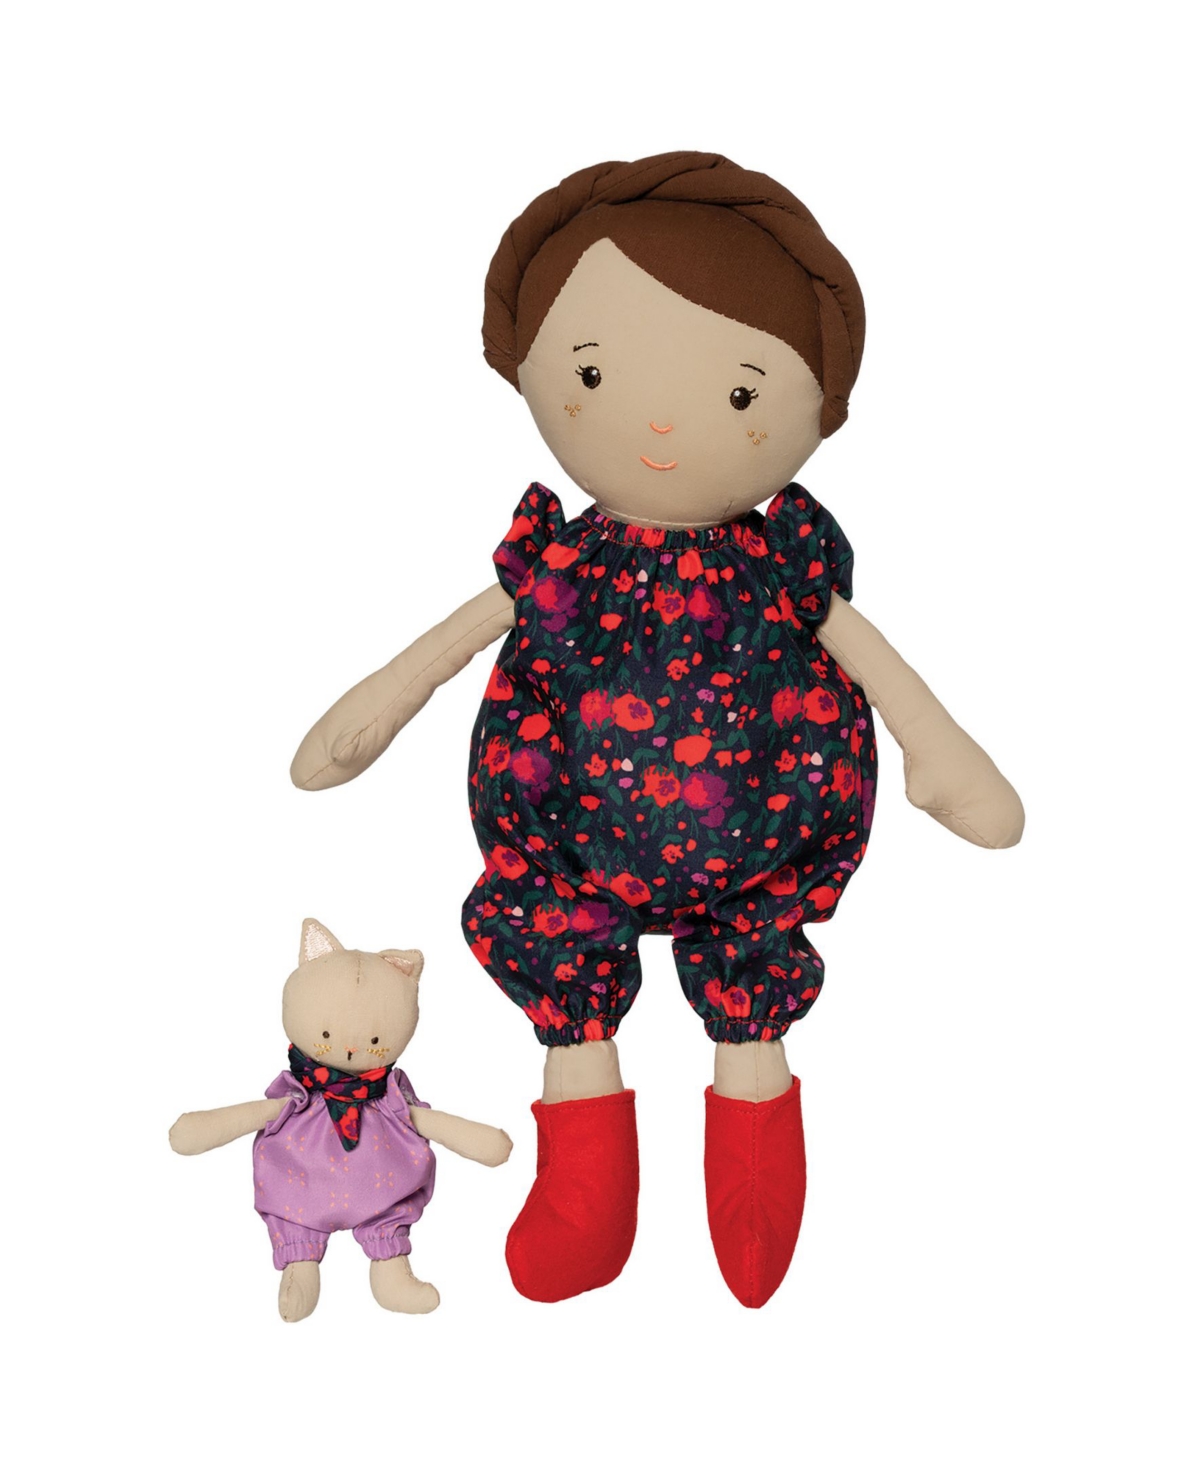 Manhattan Toy Company Babies' Playdate Friends Freddie 14" Doll With Companion Stuffed Animal In Multi